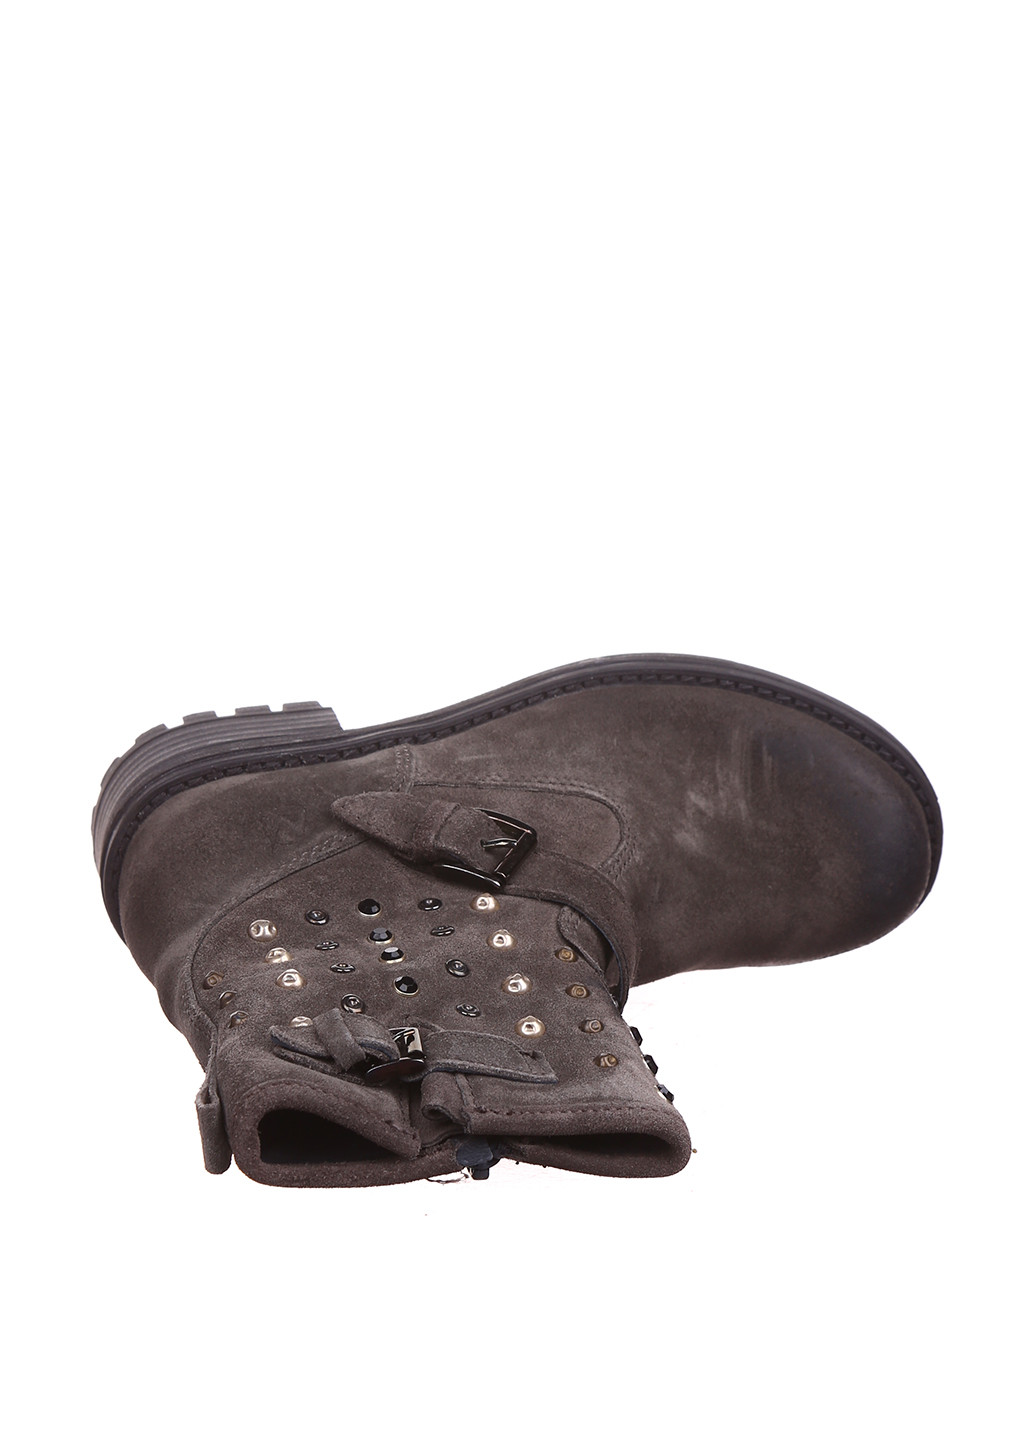 Темно-серые кэжуал осенние ботинки Naturino